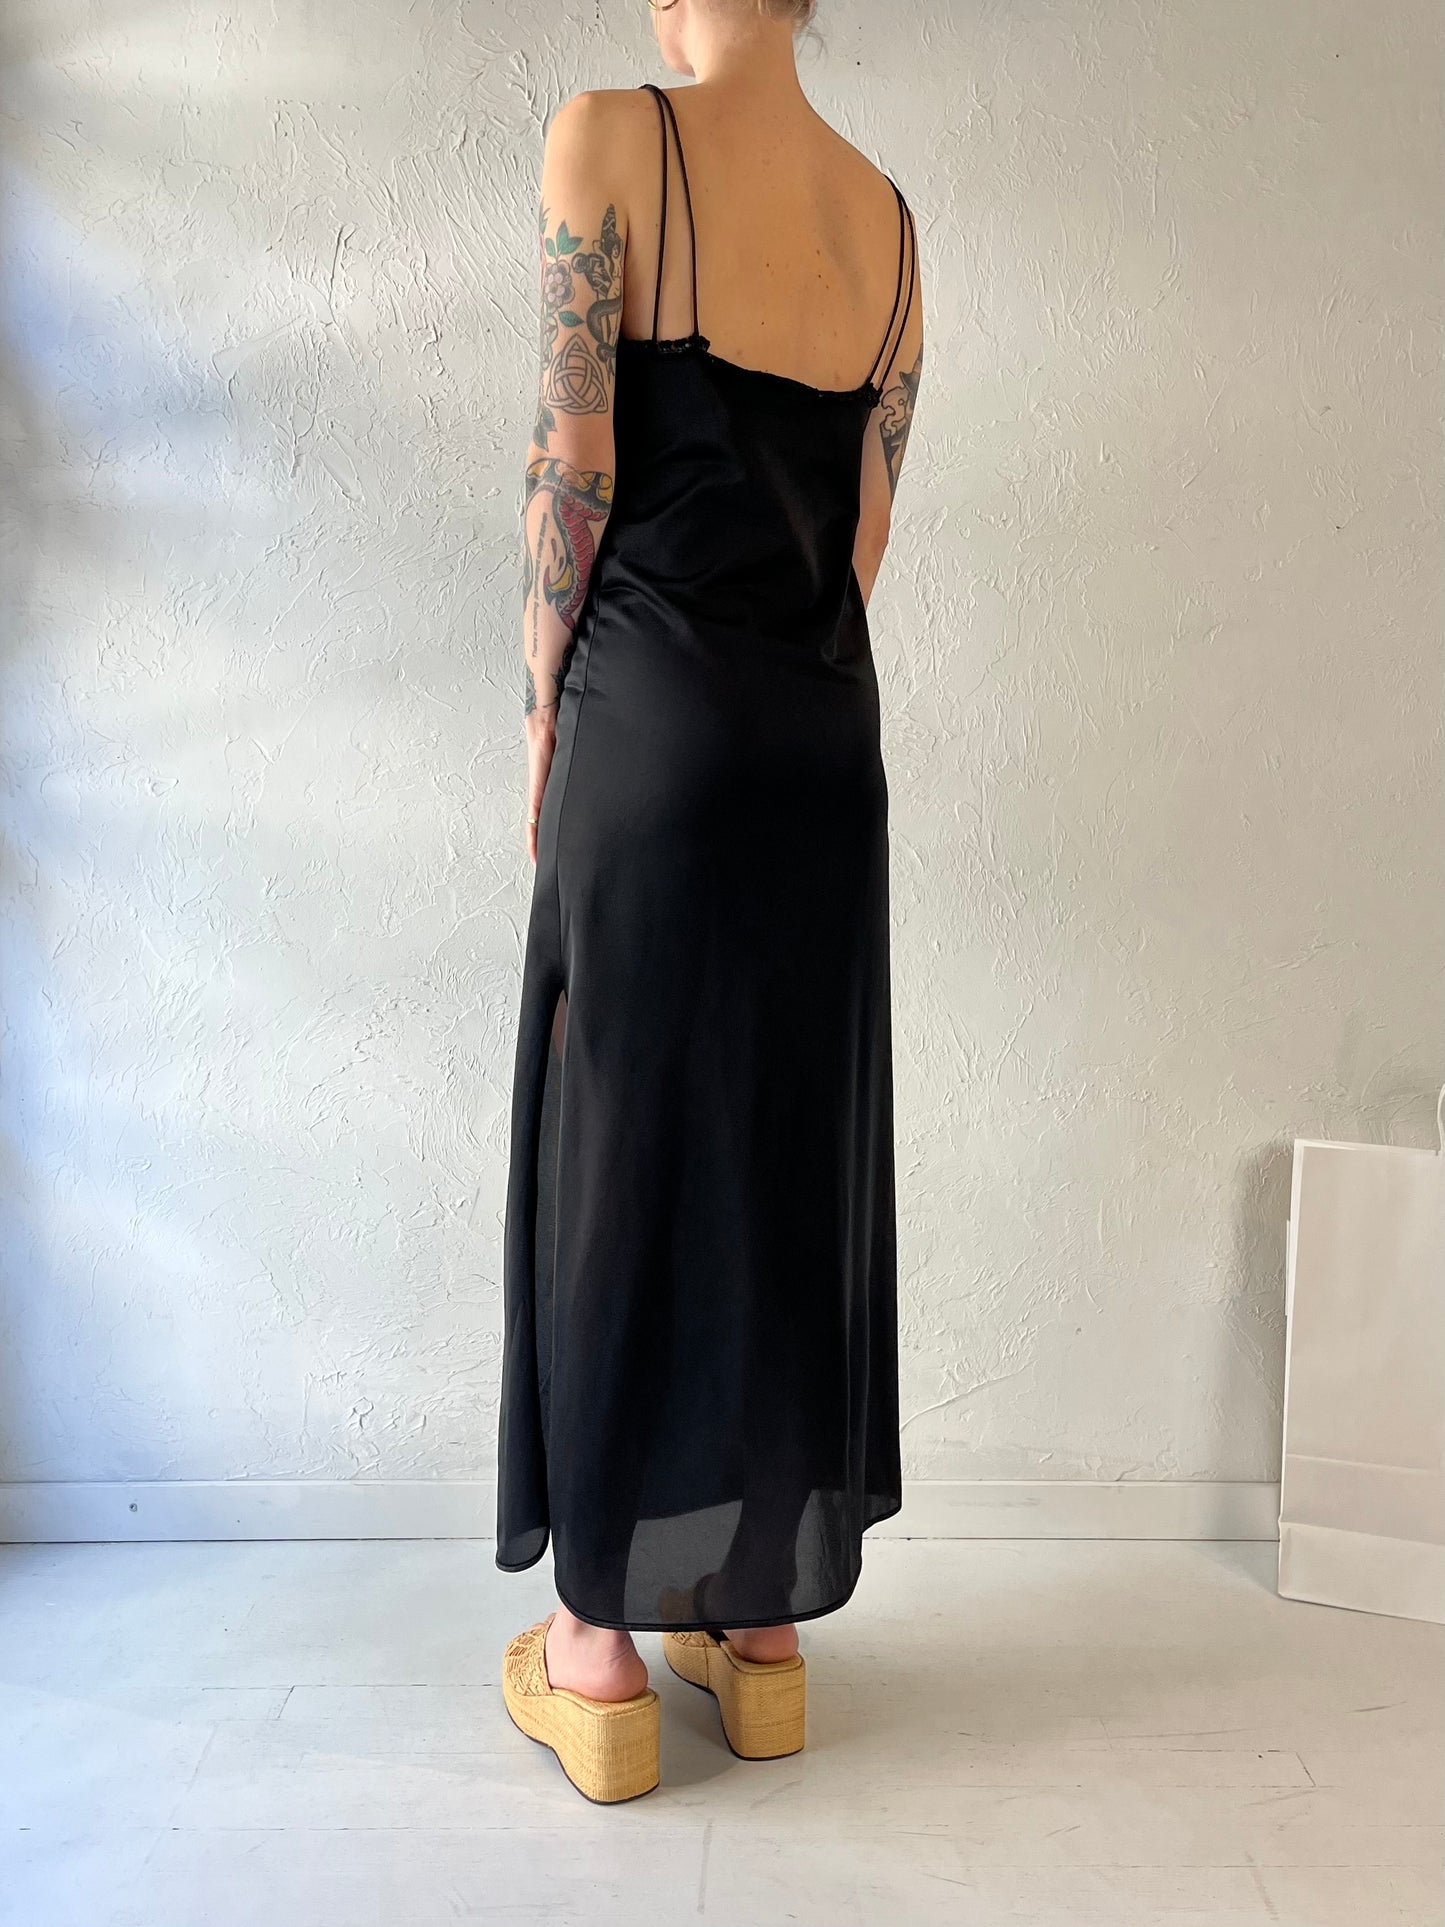 90s 'Vanity Fair' Black Slip Dress / Small